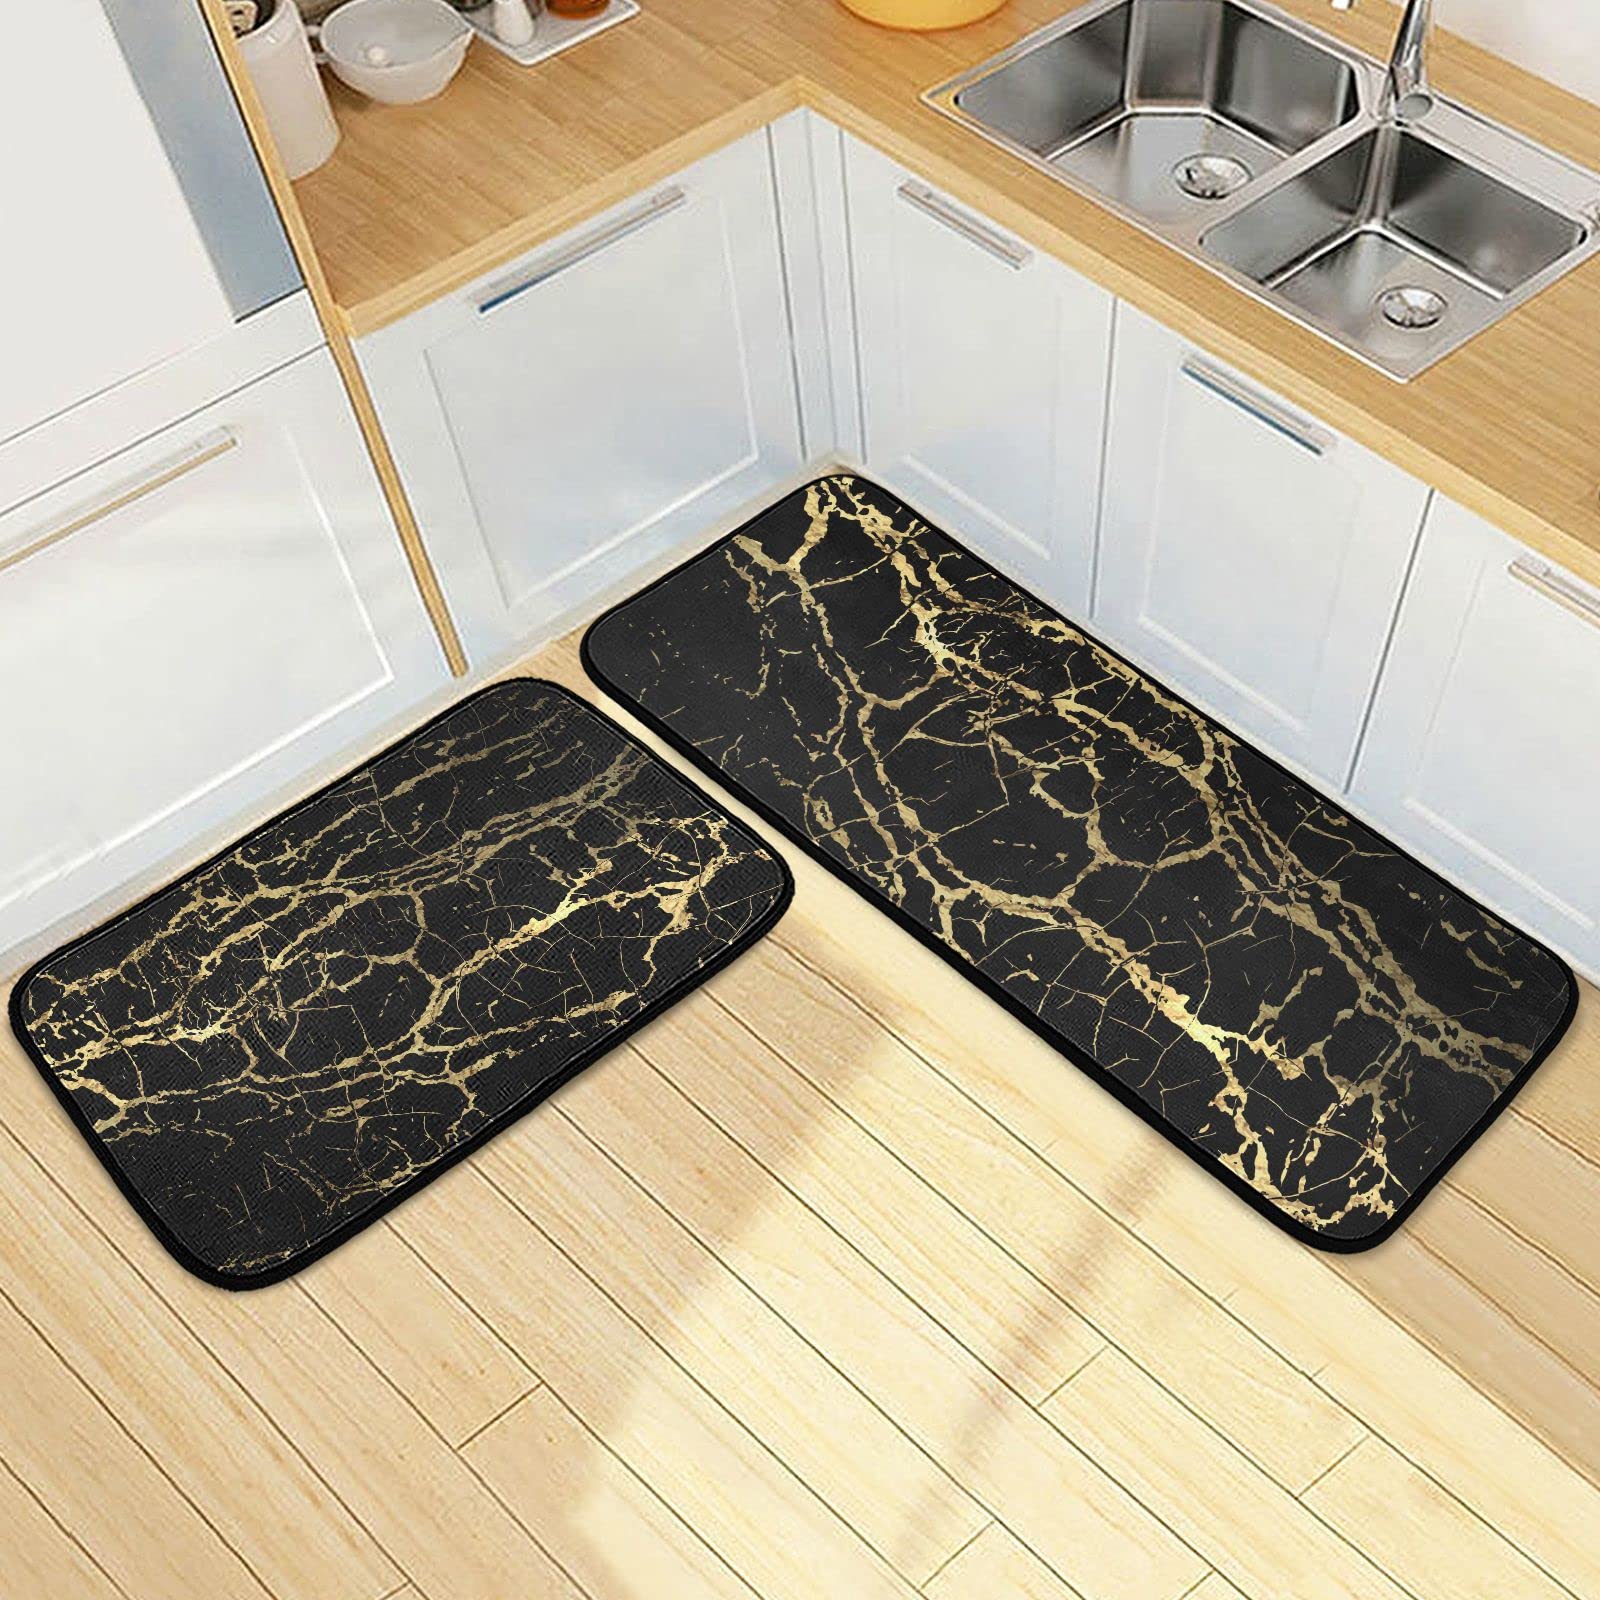 BOENLE Kitchen Rugs and Mats Non Skid Washable Kitchen Rug Set 2 Piece Black Gold Marble Carpet Ergonomic Comfort Standing Mat for Kitchen,Bathroom, Laundry